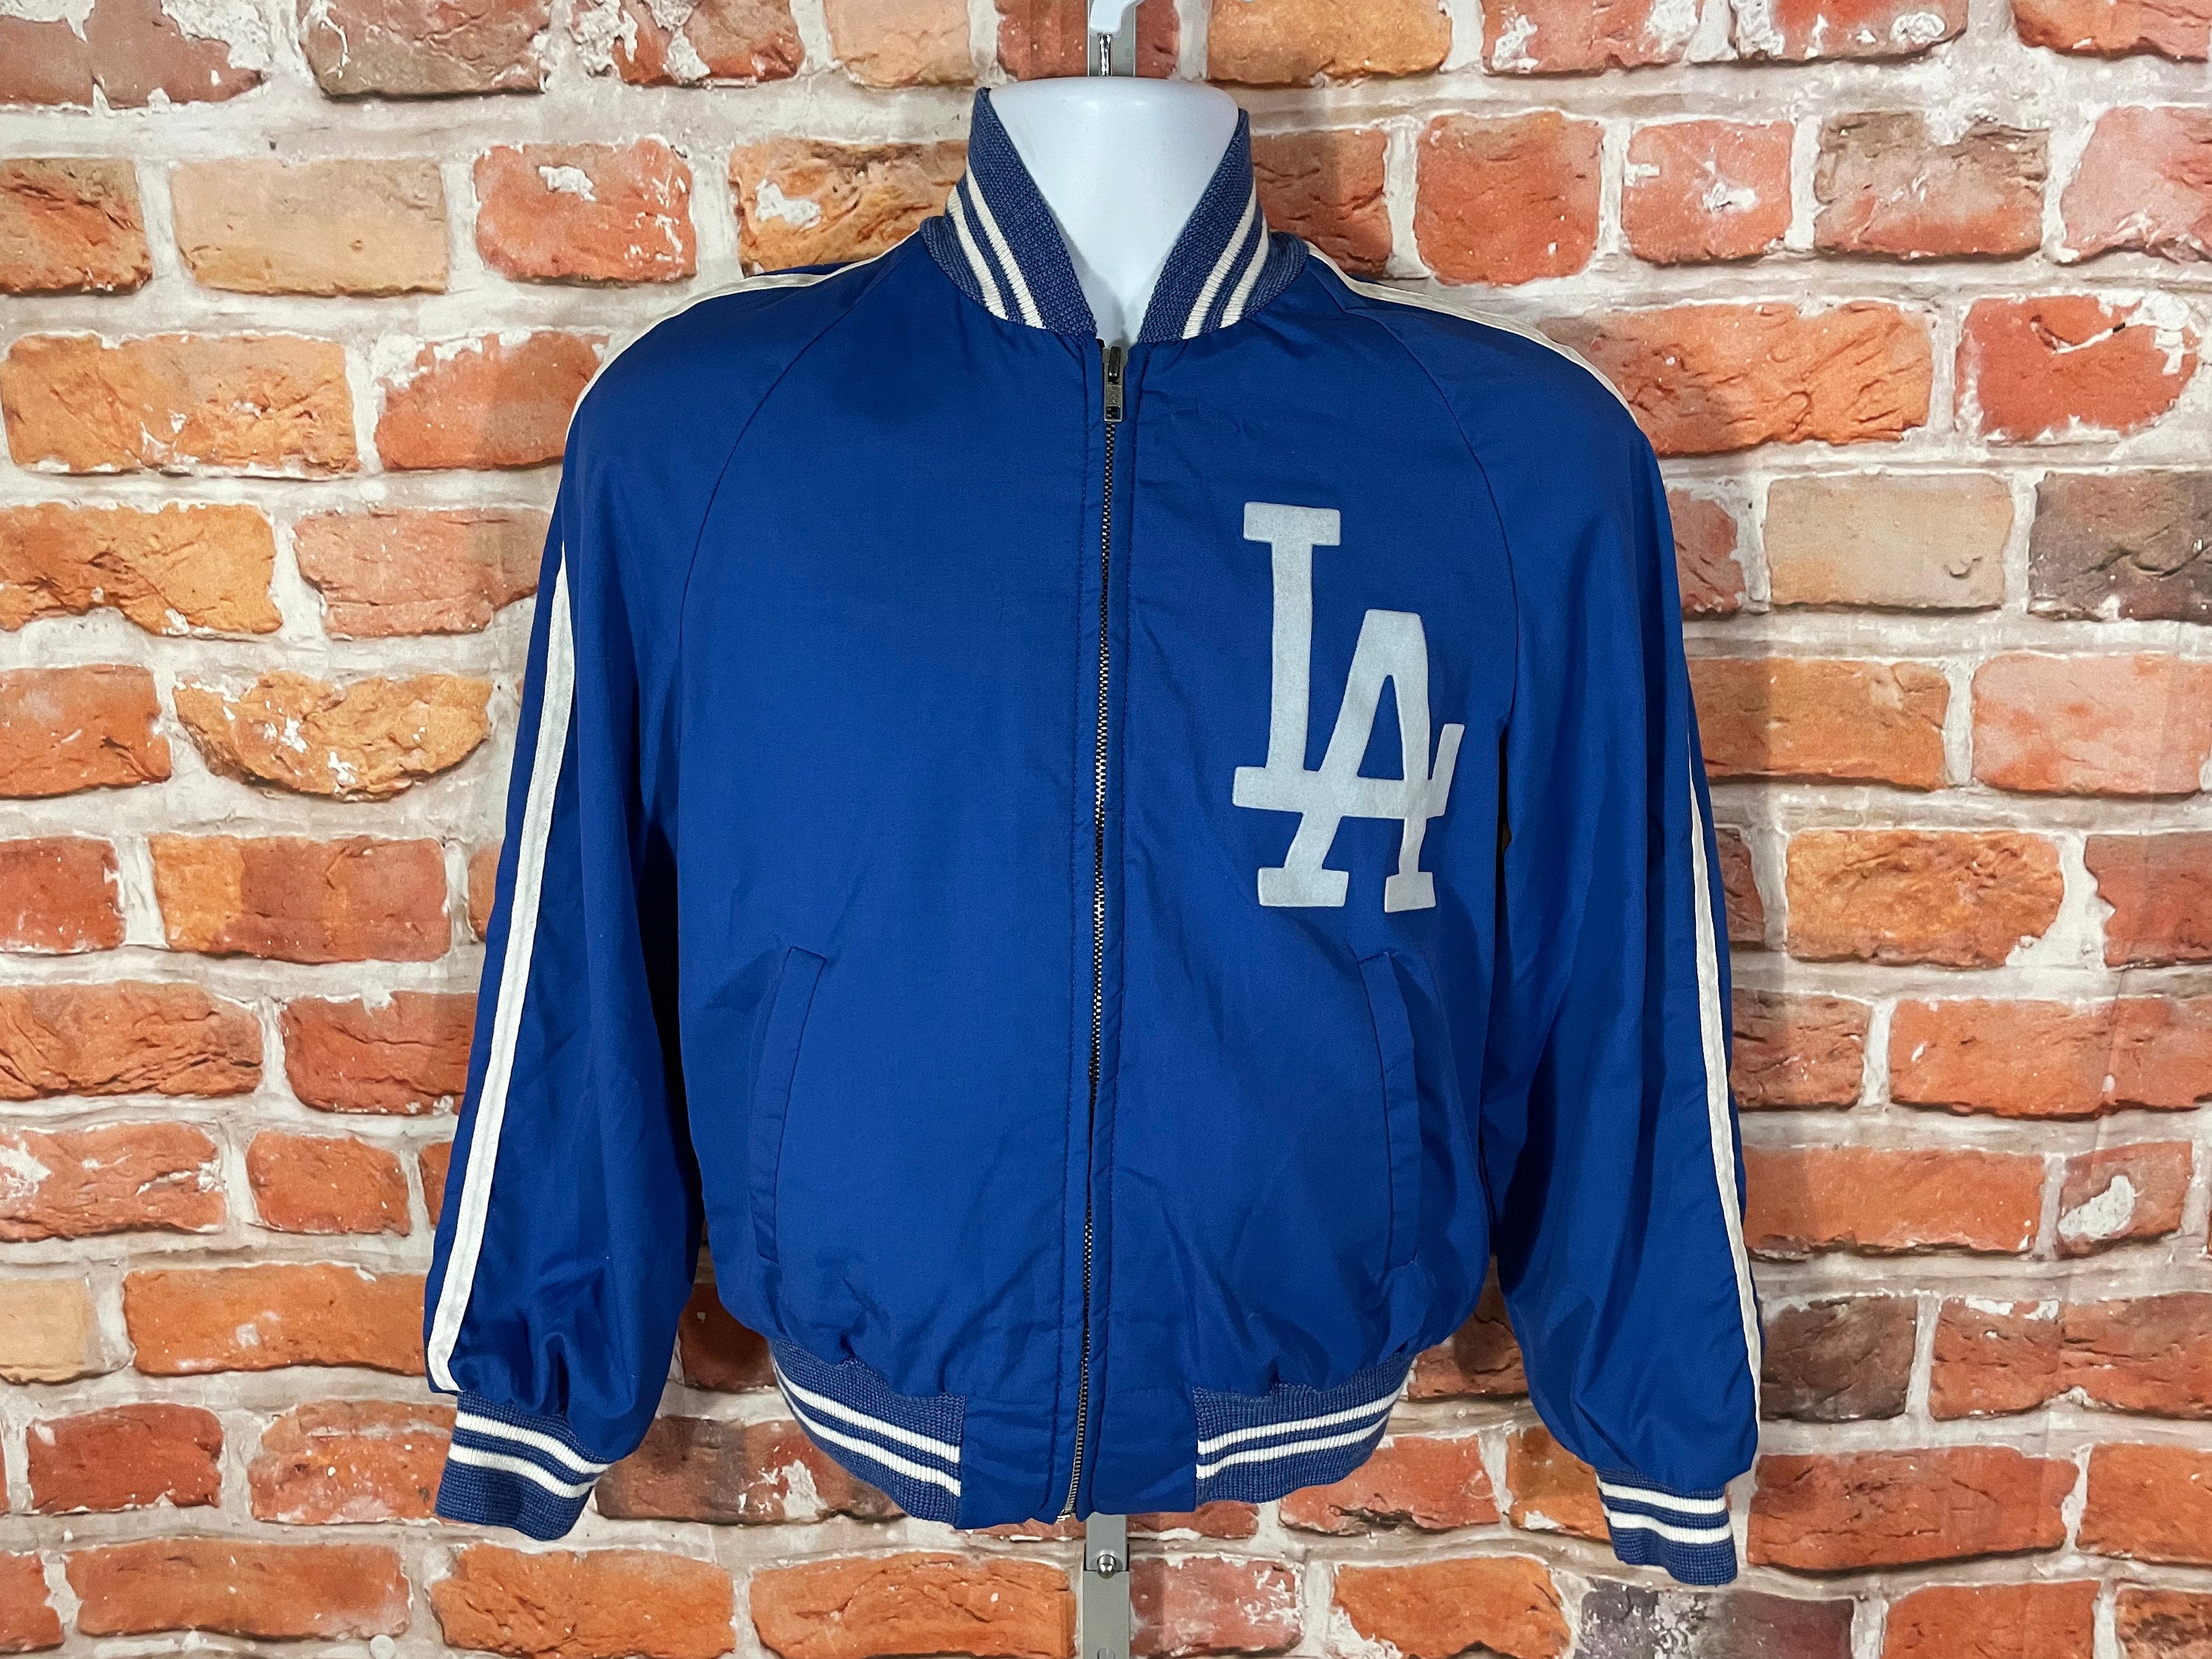 Los Angeles Dodgers Jacket | 1980s Vintage Style Bomber Jacket